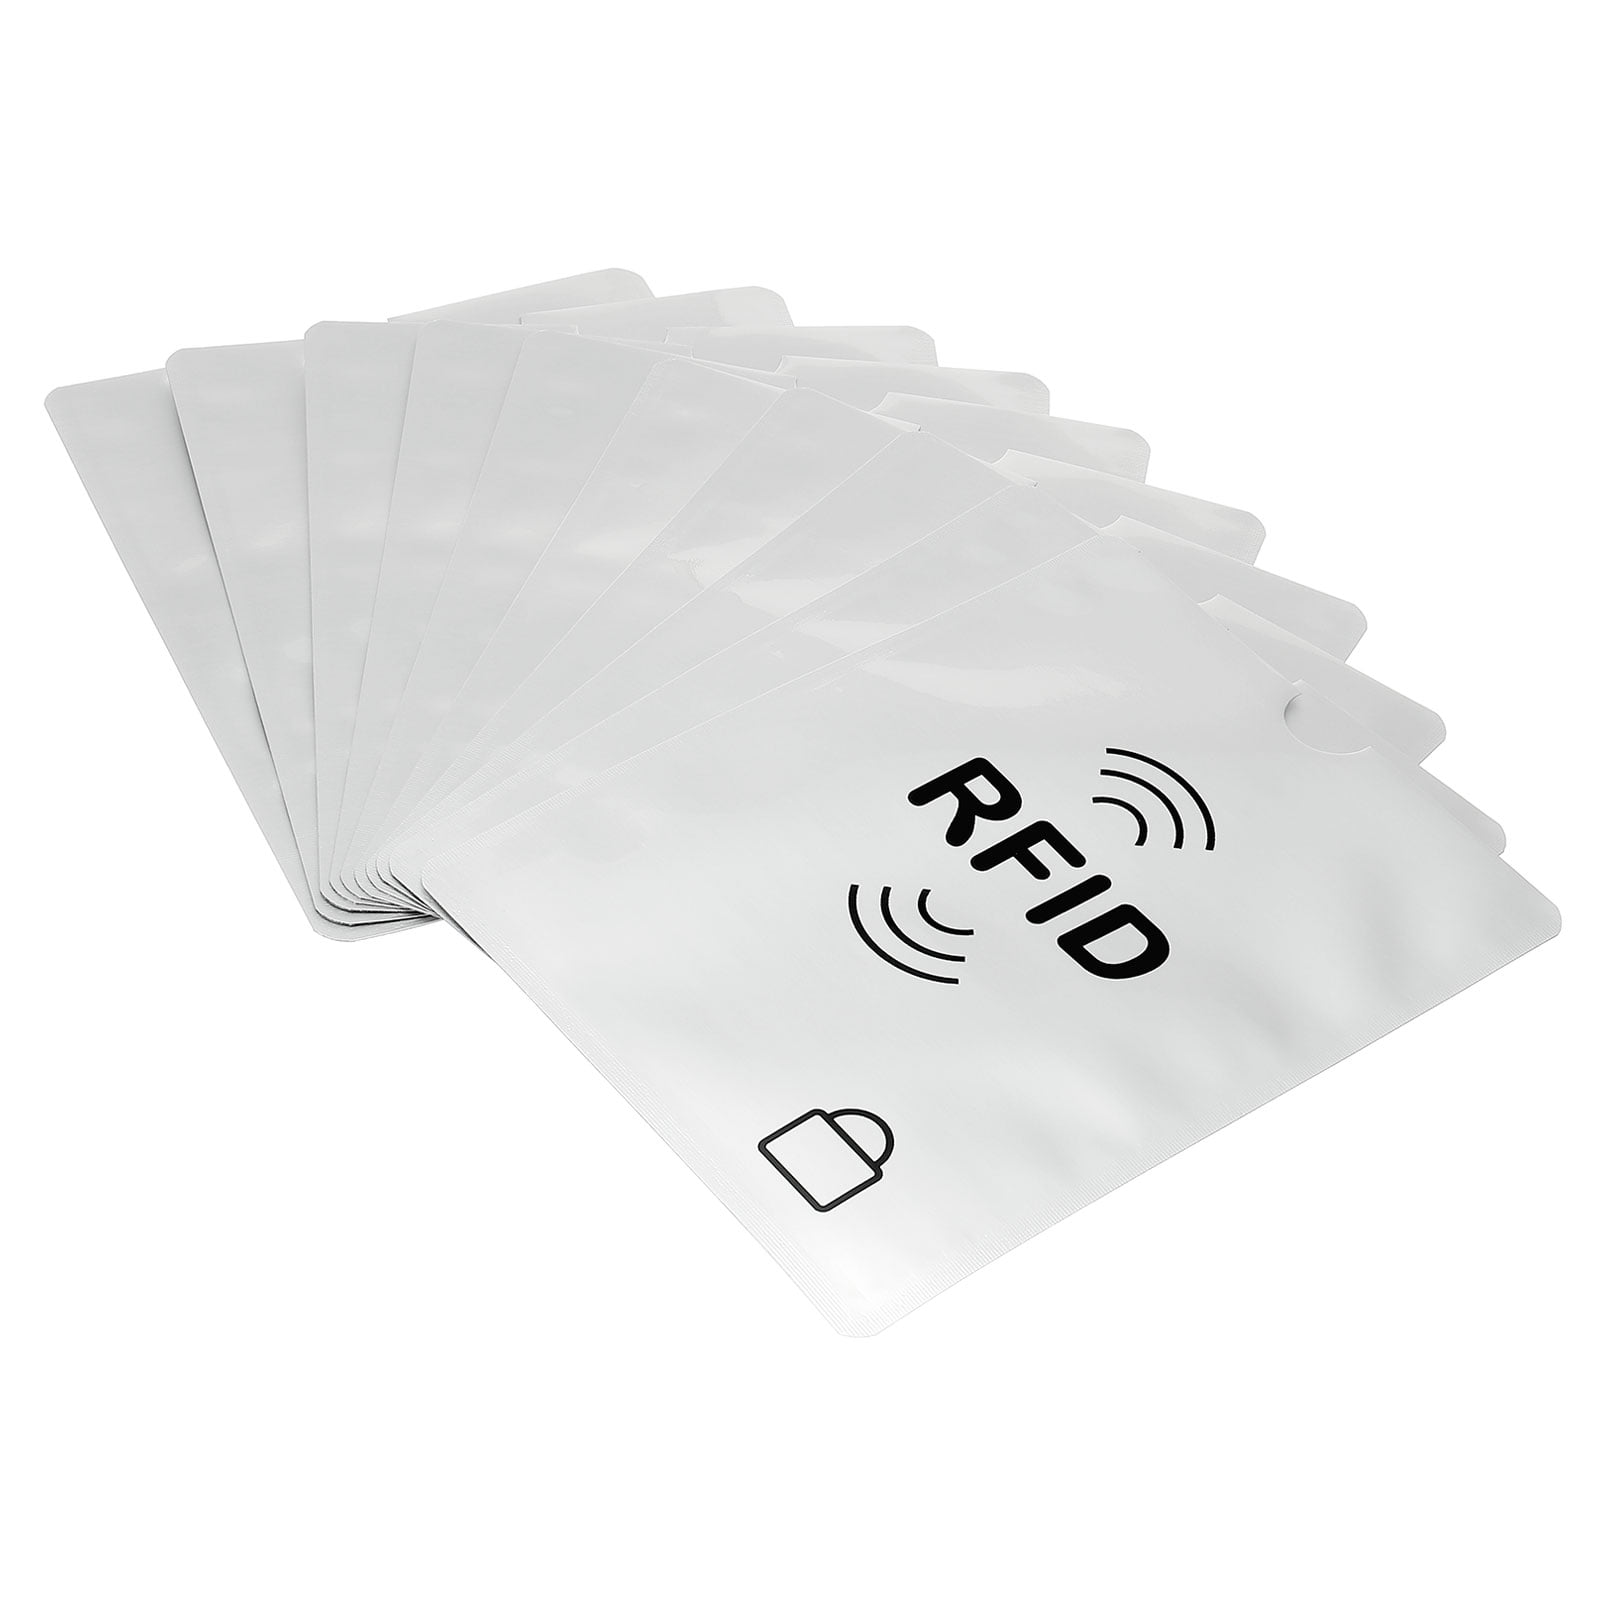 10 Pack Simple Credit Card ID Anti Theft RFID Blocking Sleeve Shield Waterproof Protector Secure Holder 